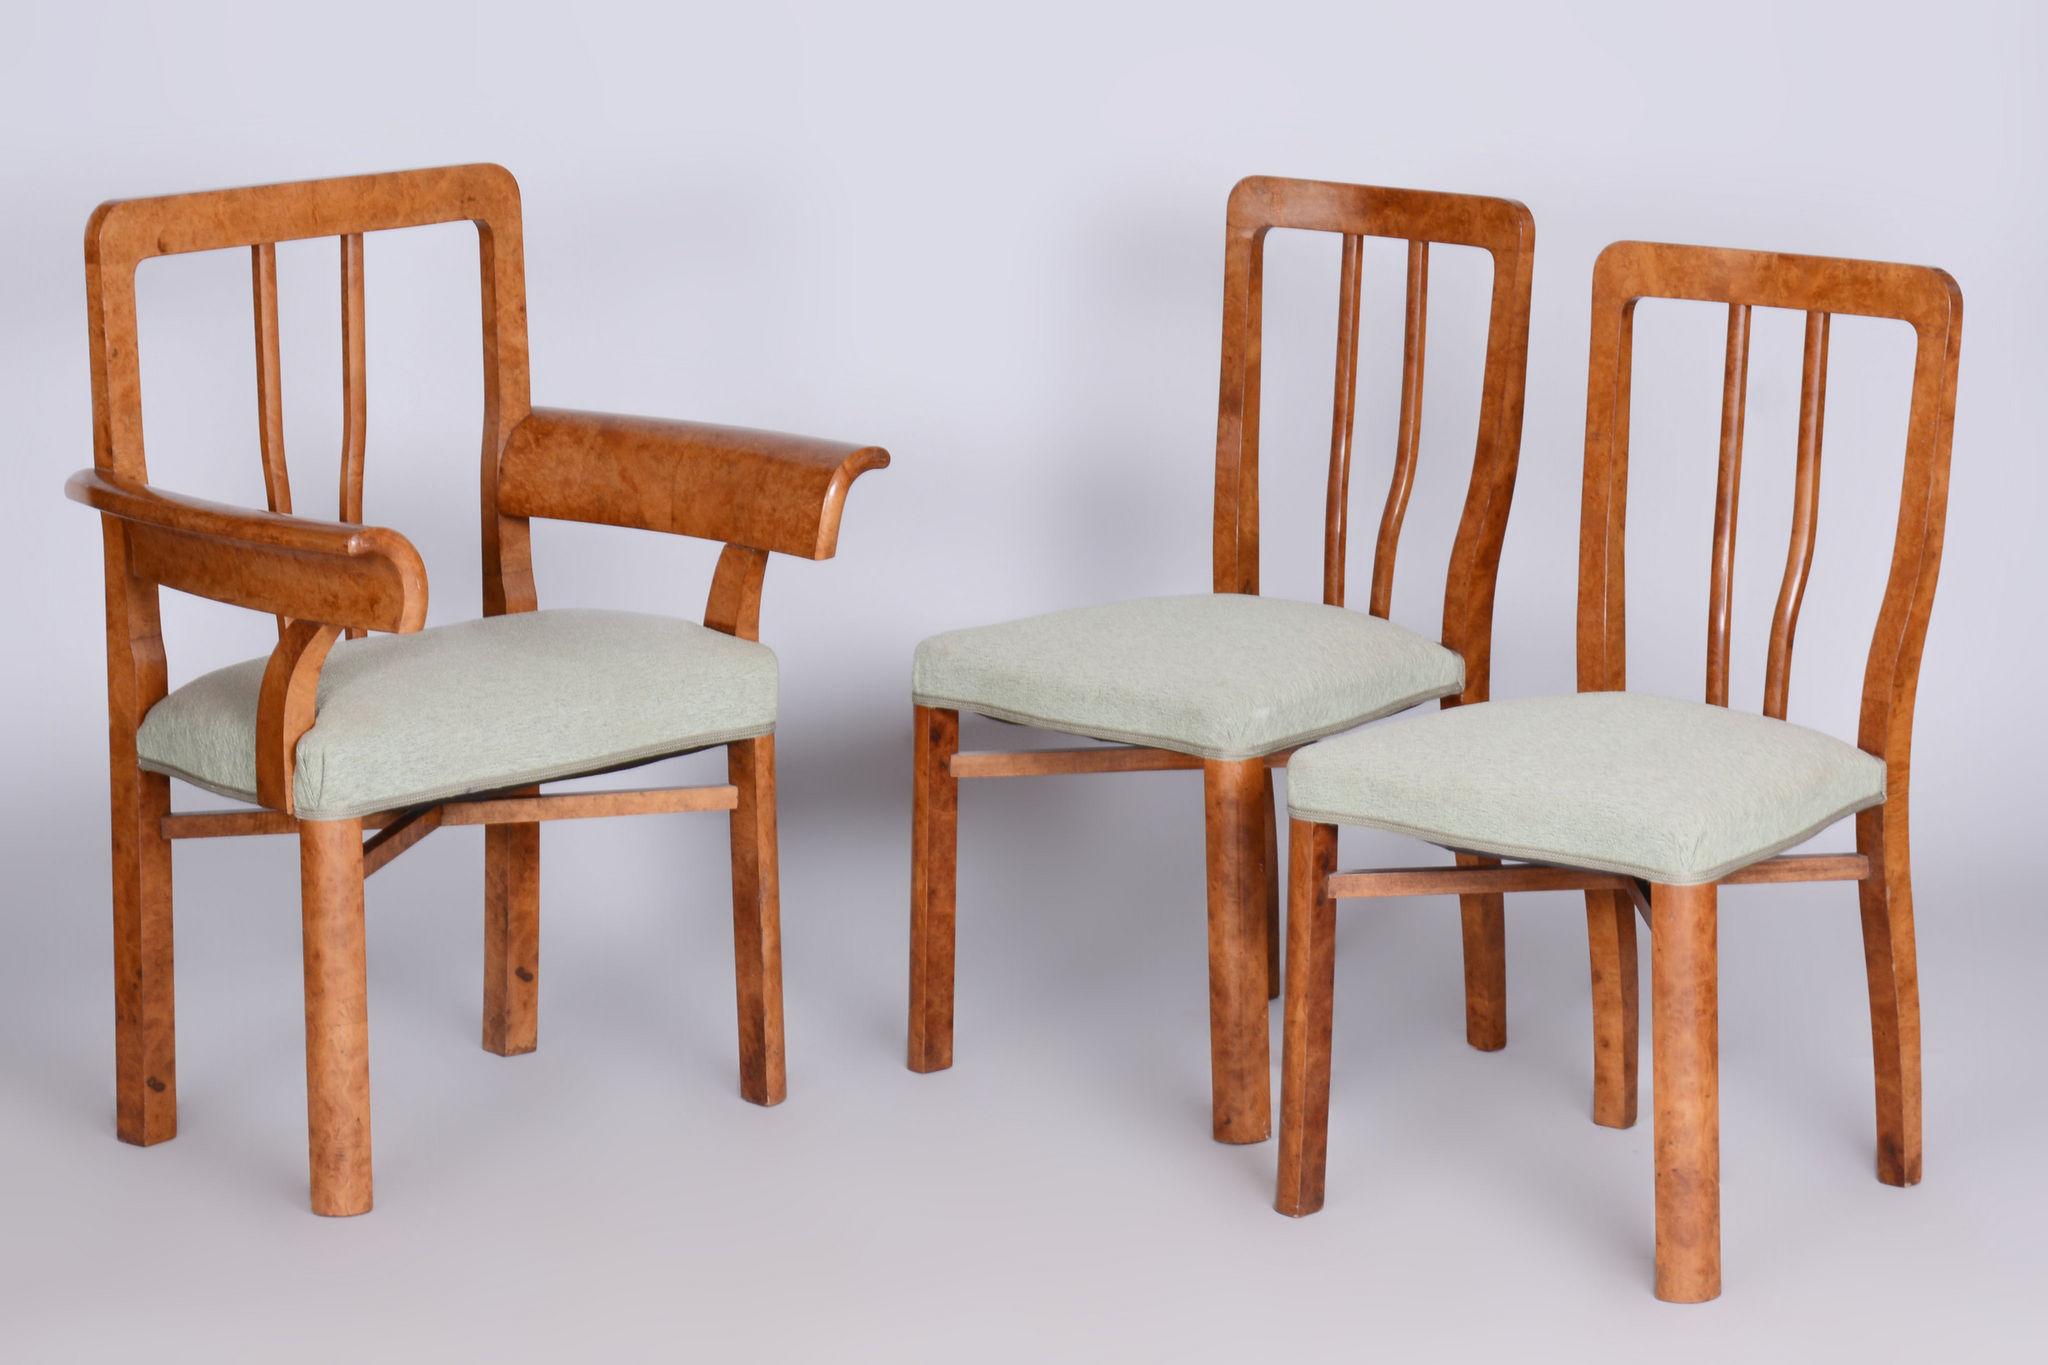 Restored ArtDeco Seating Set.

Source: Czechia (Czechoslovakia)
Period: 1930-1939
Material: Beech, Maple Root Veneer

Armchair dimensions:
Height: 94 cm (37 in)
Width: 71 cm (28 in)
Depth: 51 cm (20.1 in)
Seat height: 51 cm (20.1 in)

Chair's